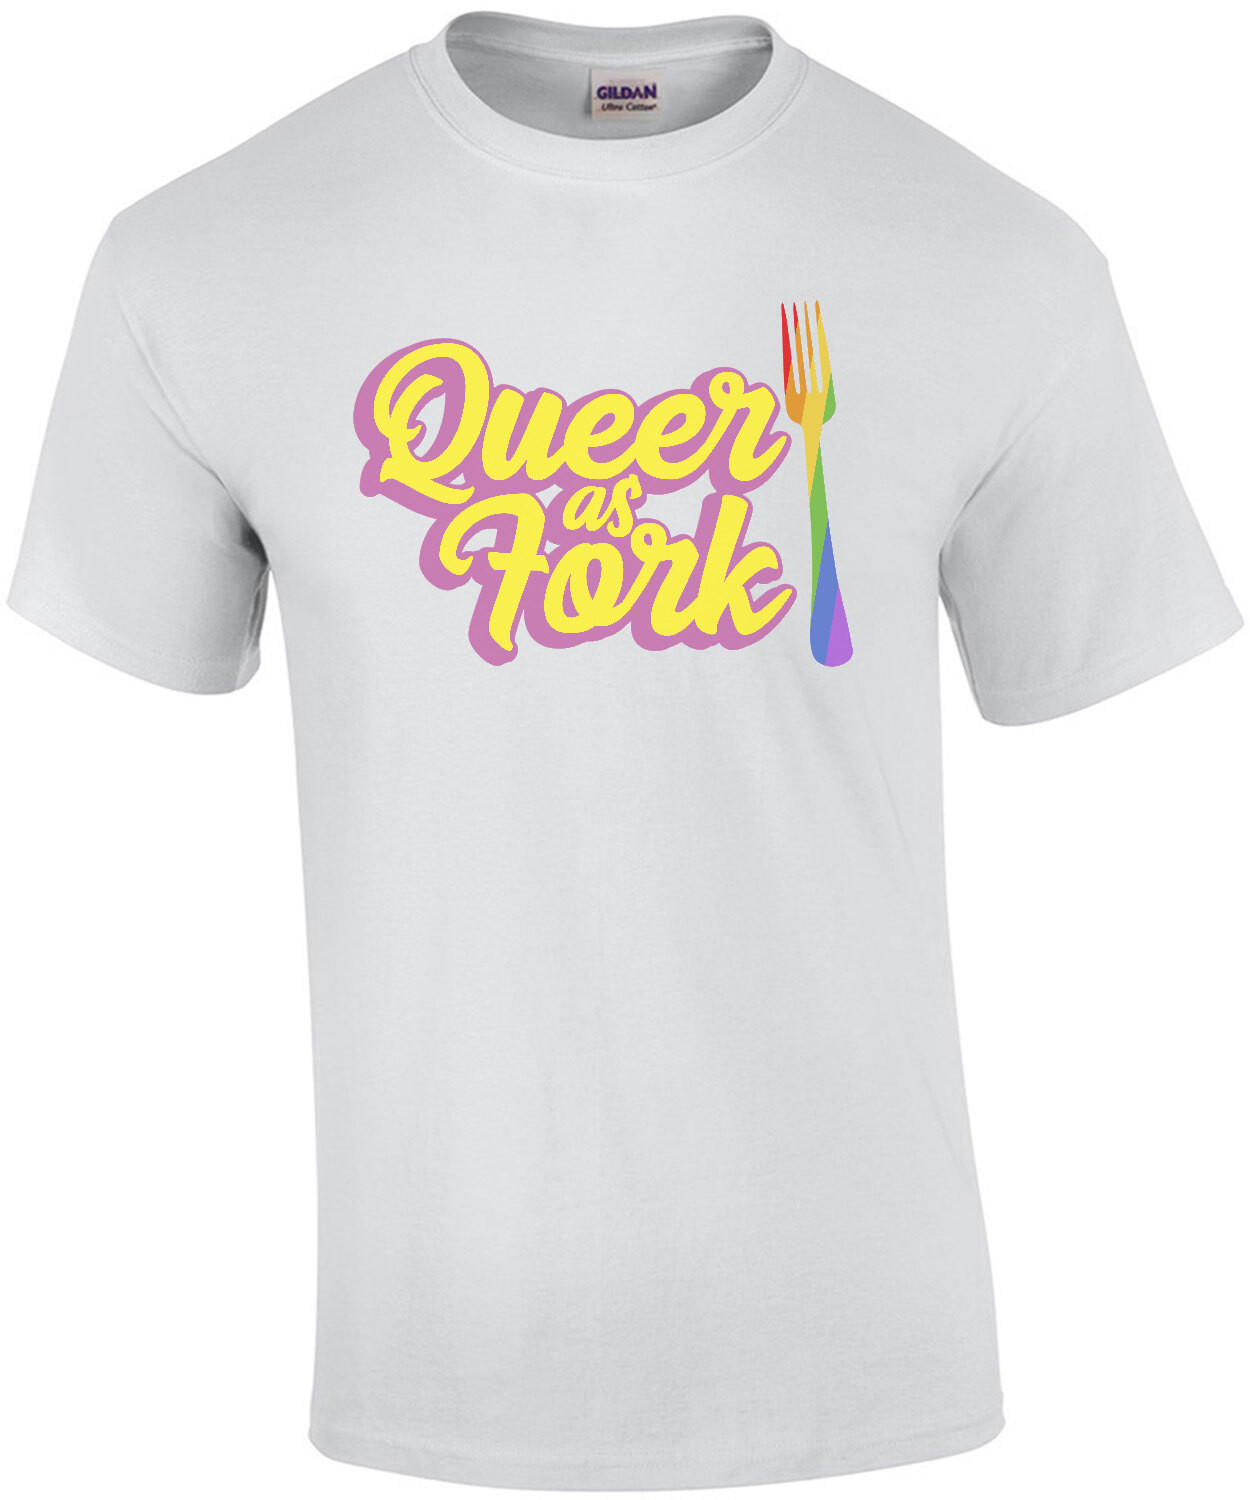 Queer as fork - funny gay pride t-shirt / LGBTQ T-Shirt